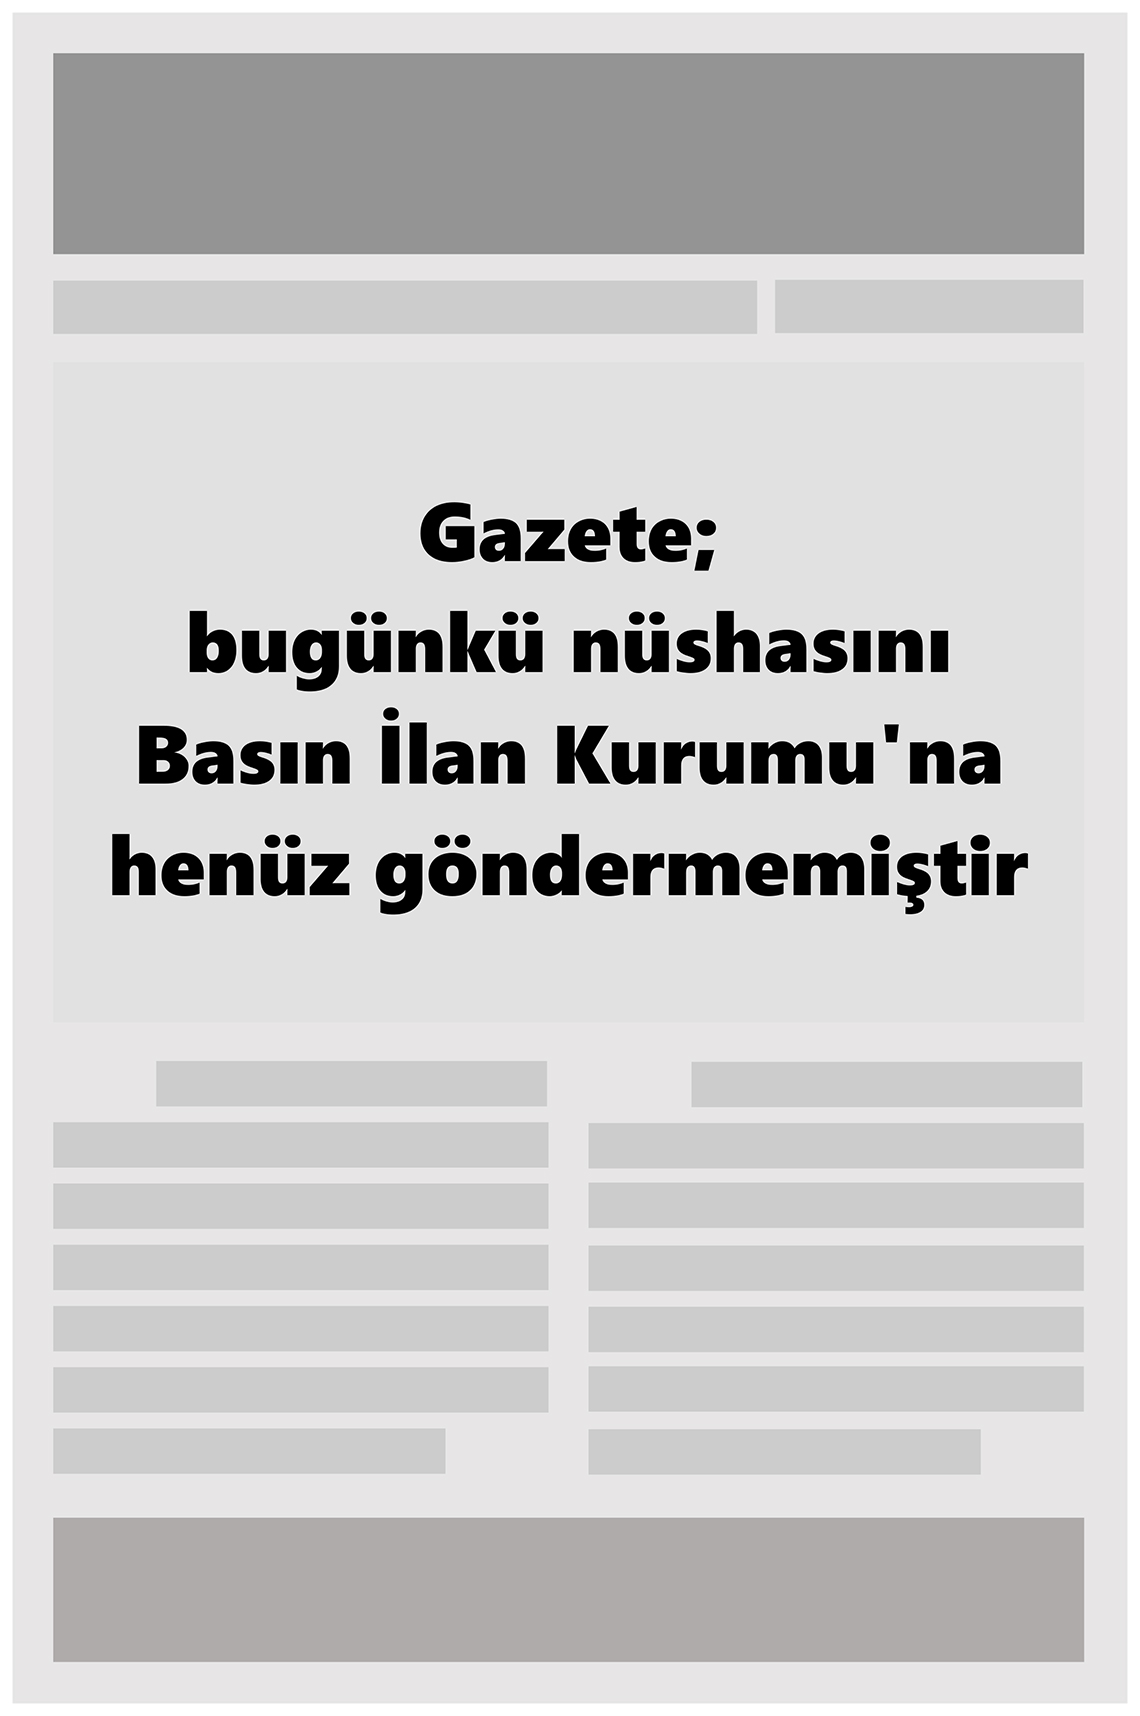 26 Haziran 2022 Öz Diyarbakir Gazete Gazete Manşeti